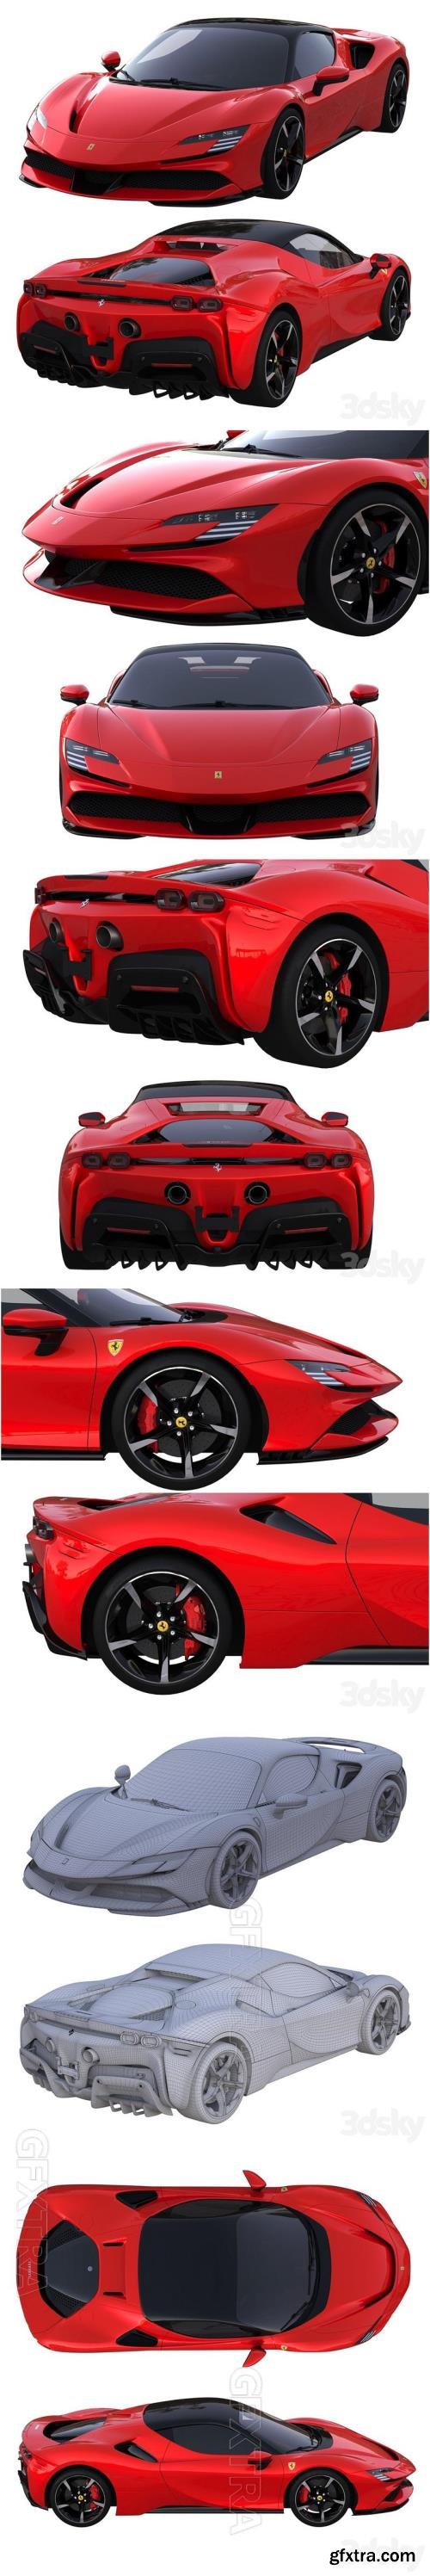 Ferrari SF90 Stradale - 3D Model